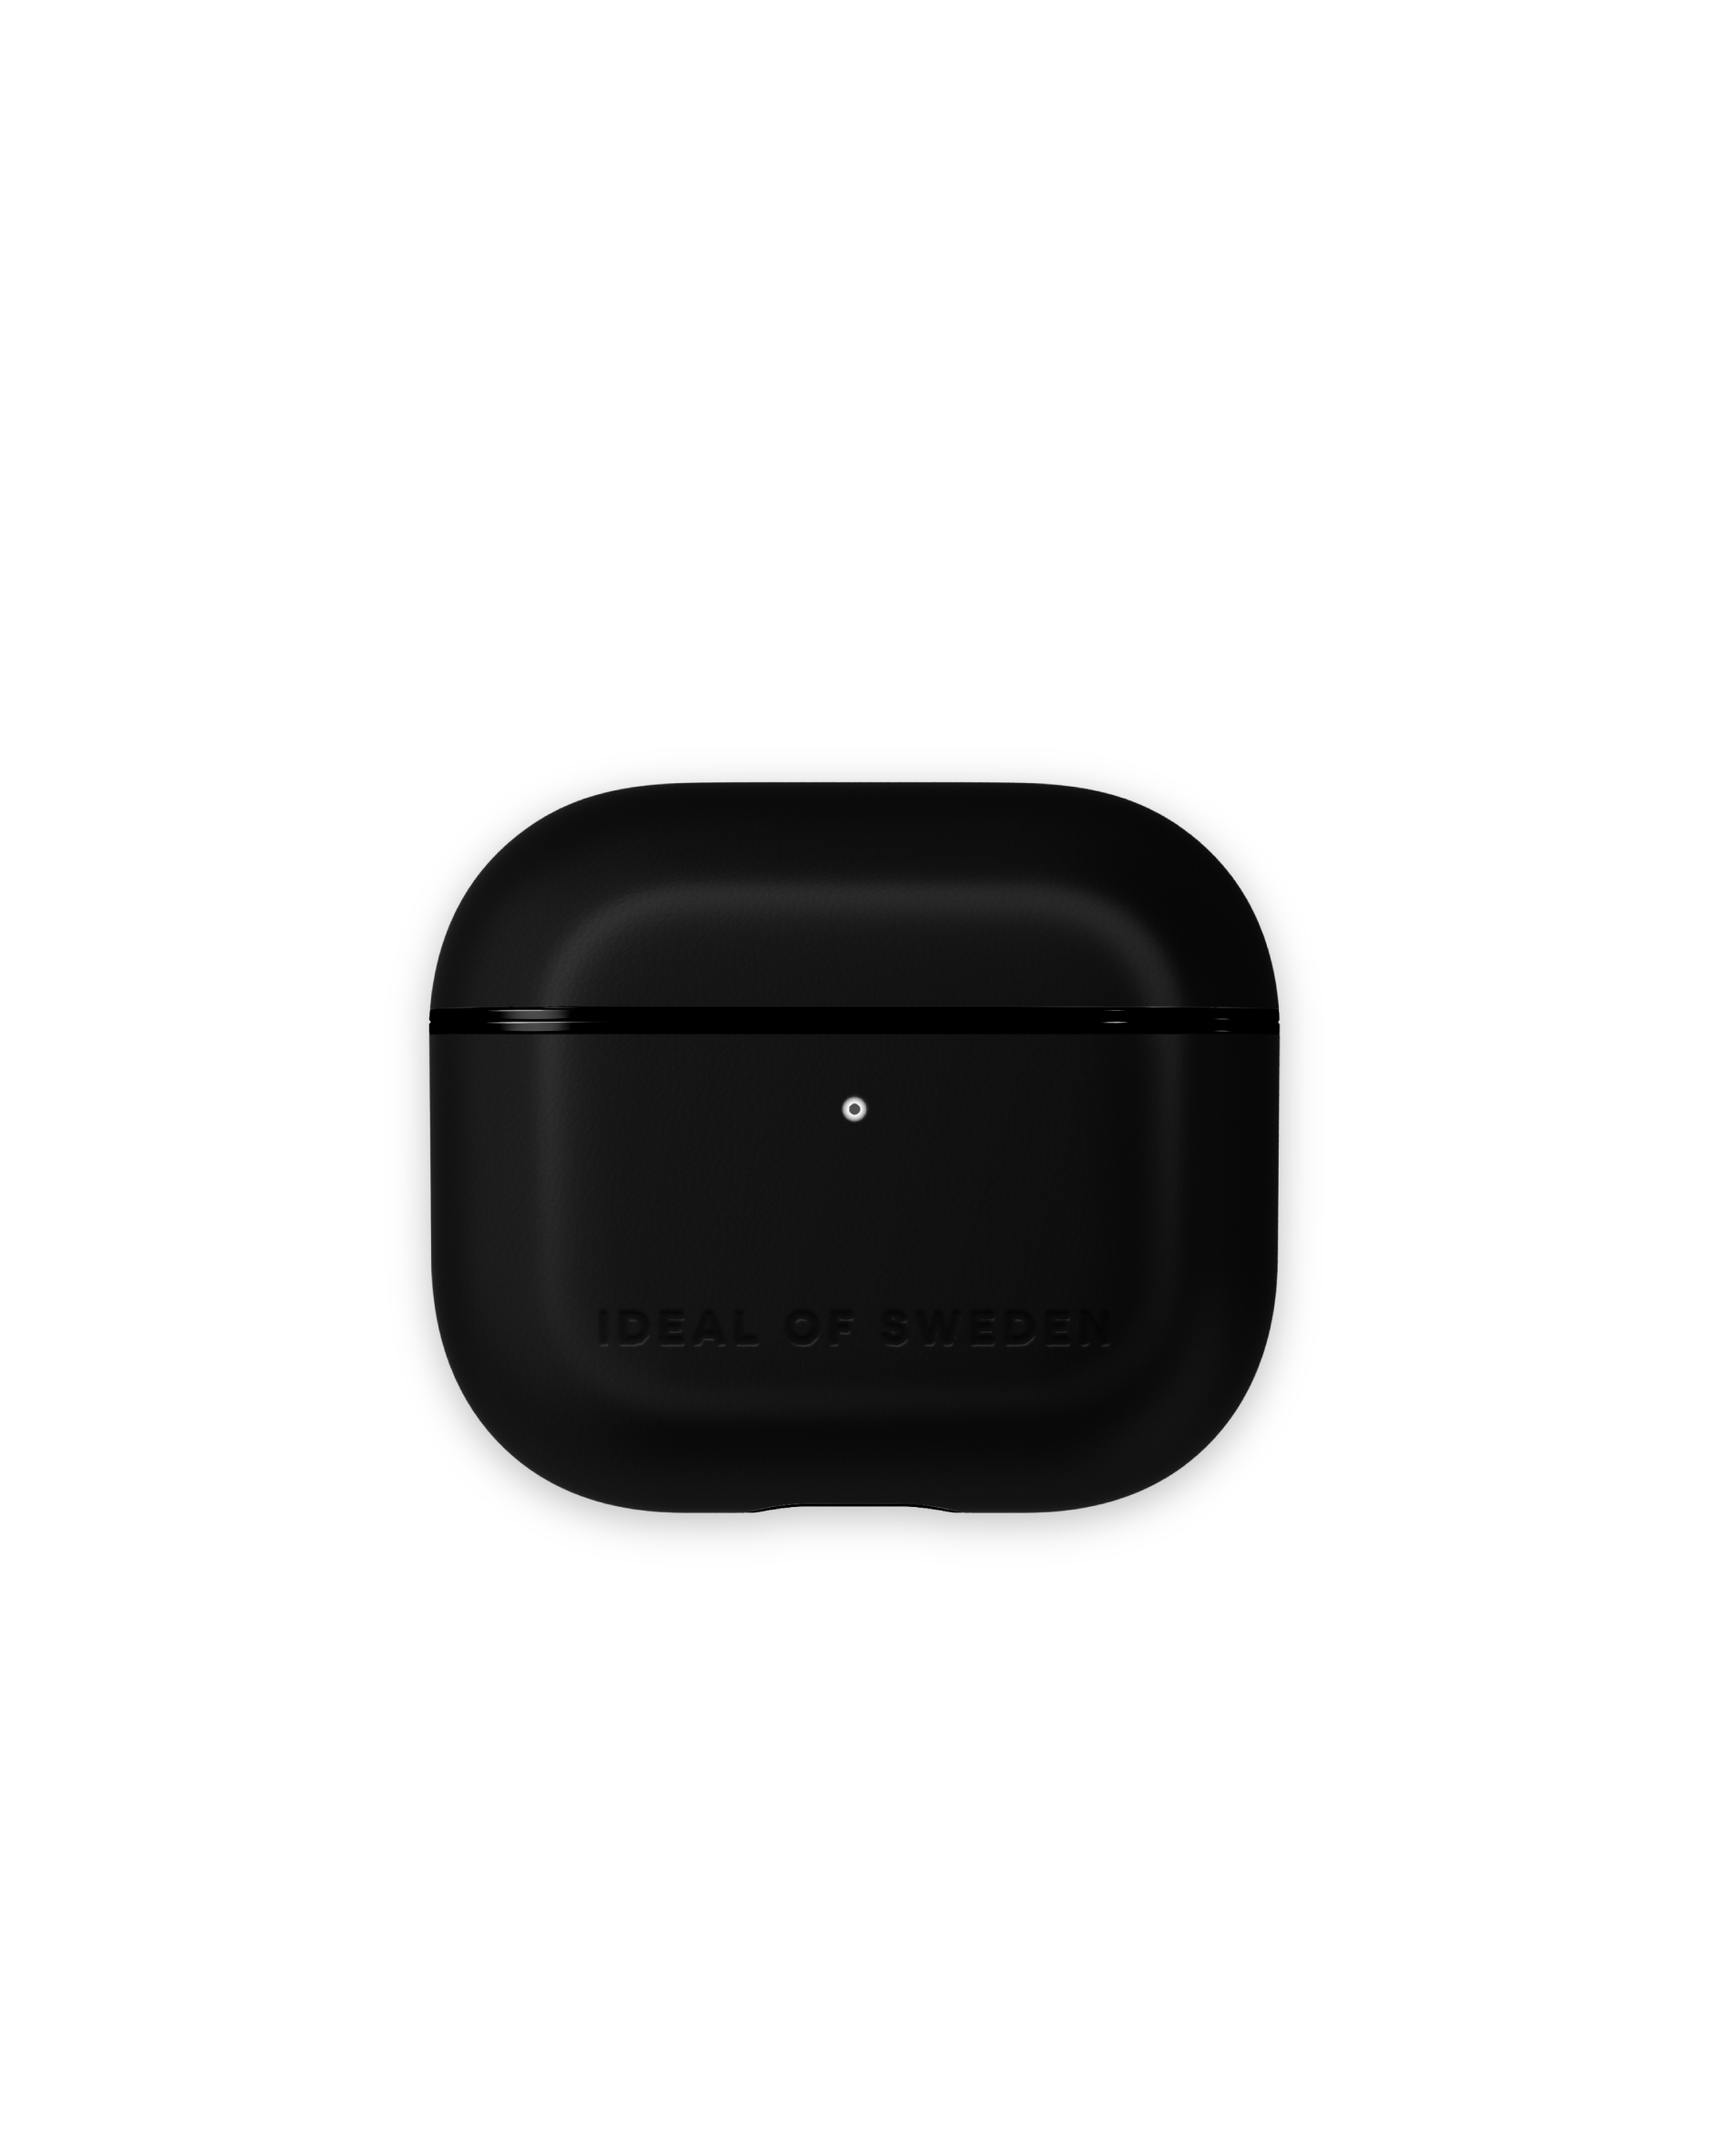 passend OF Apple für: IDAAPC-COM-G4-01 AirPod Como IDEAL CaseKopfhörer-Schutzhülle SWEDEN Black